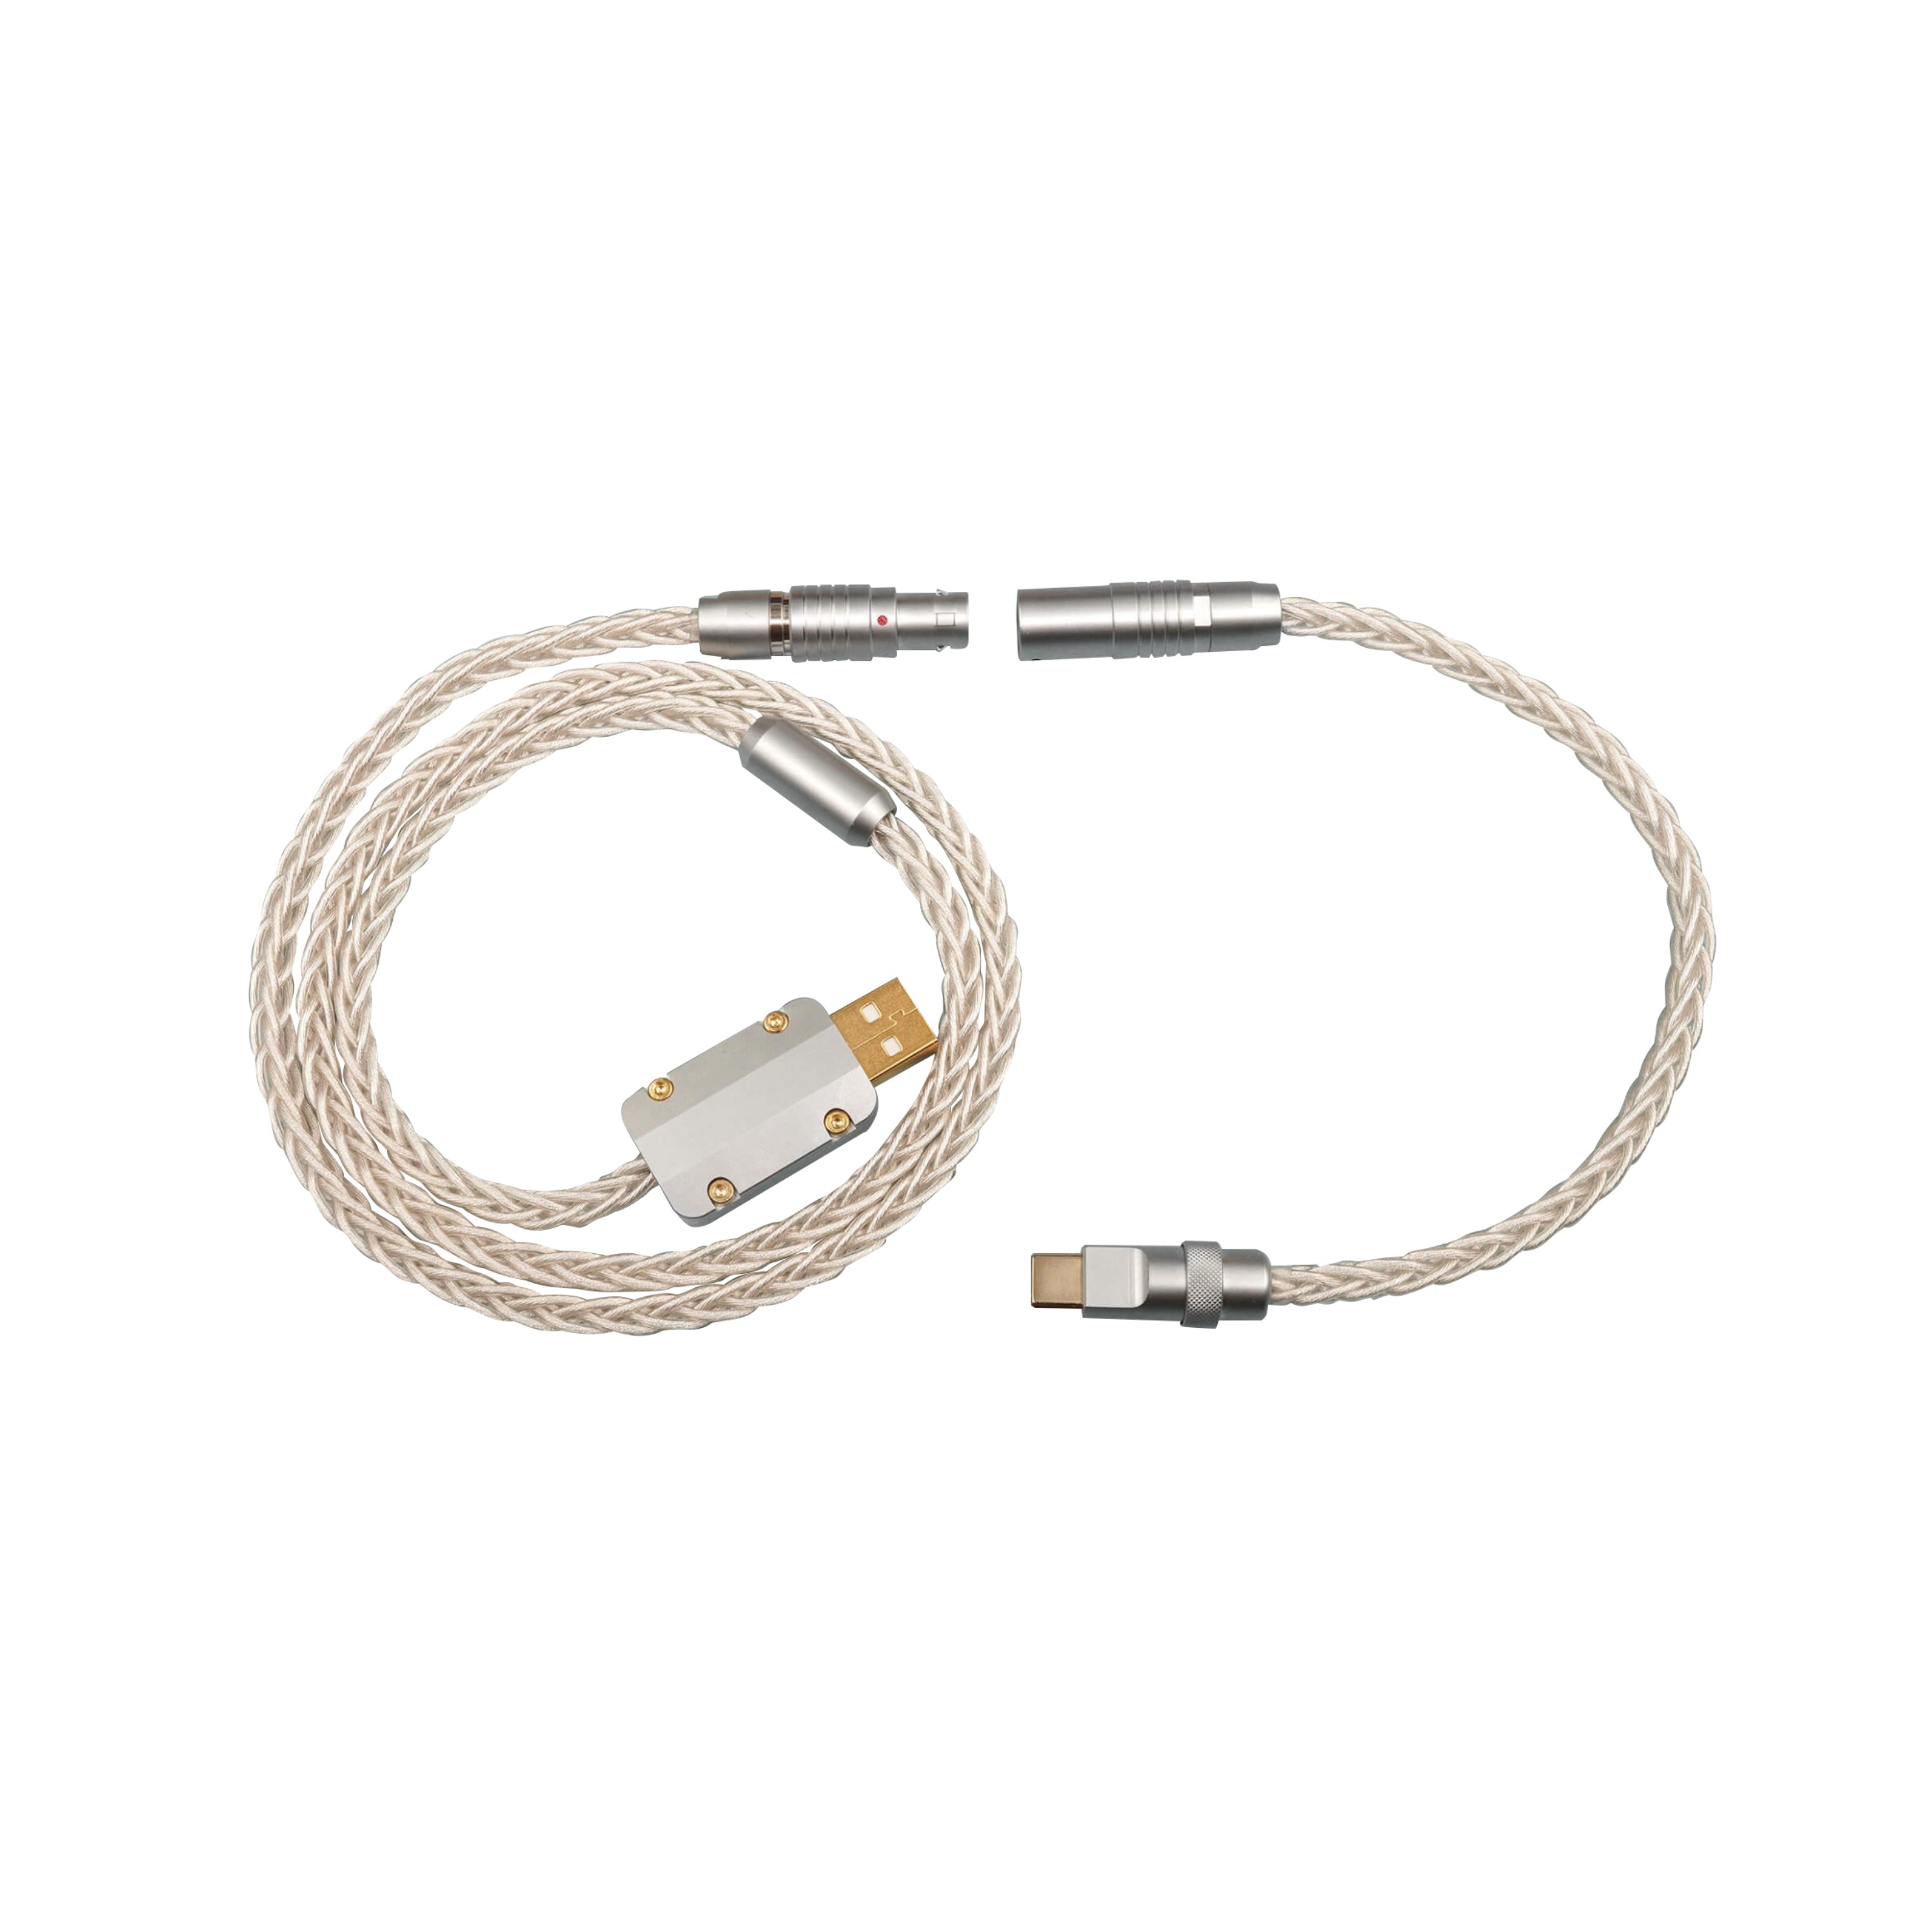 Cable USB de alambre de cobre monocristalino revestido de plata hecho a mano MelGeek